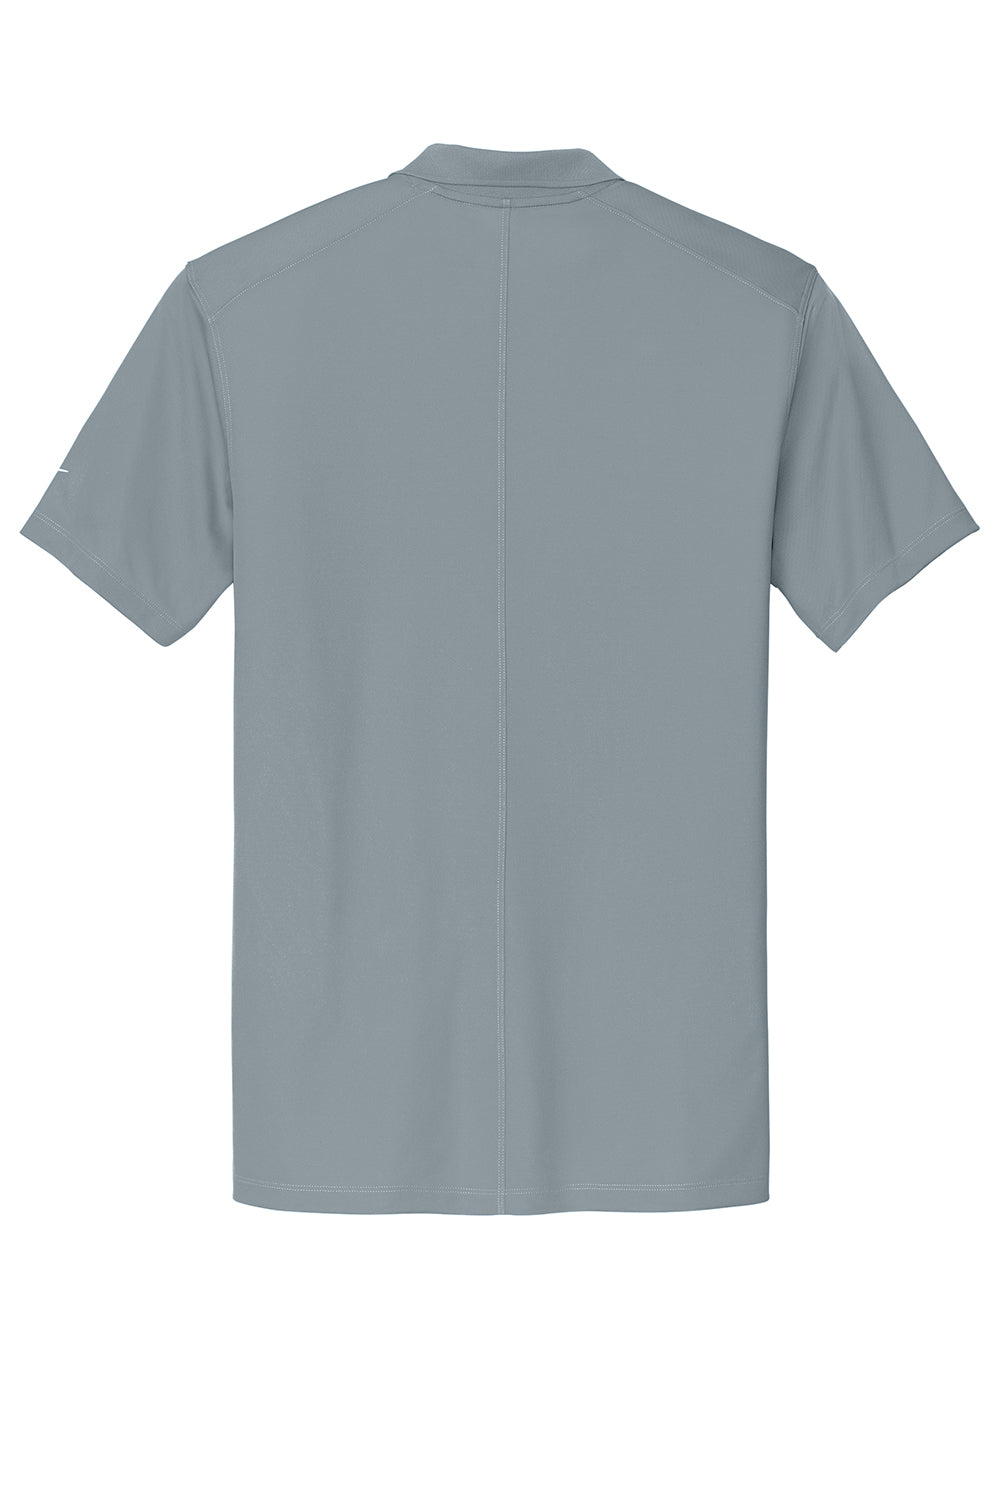 Nike NKDX6684 Mens Victory Dri-Fit Moisture Wicking Short Sleeve Polo Shirt Cool Grey Flat Back